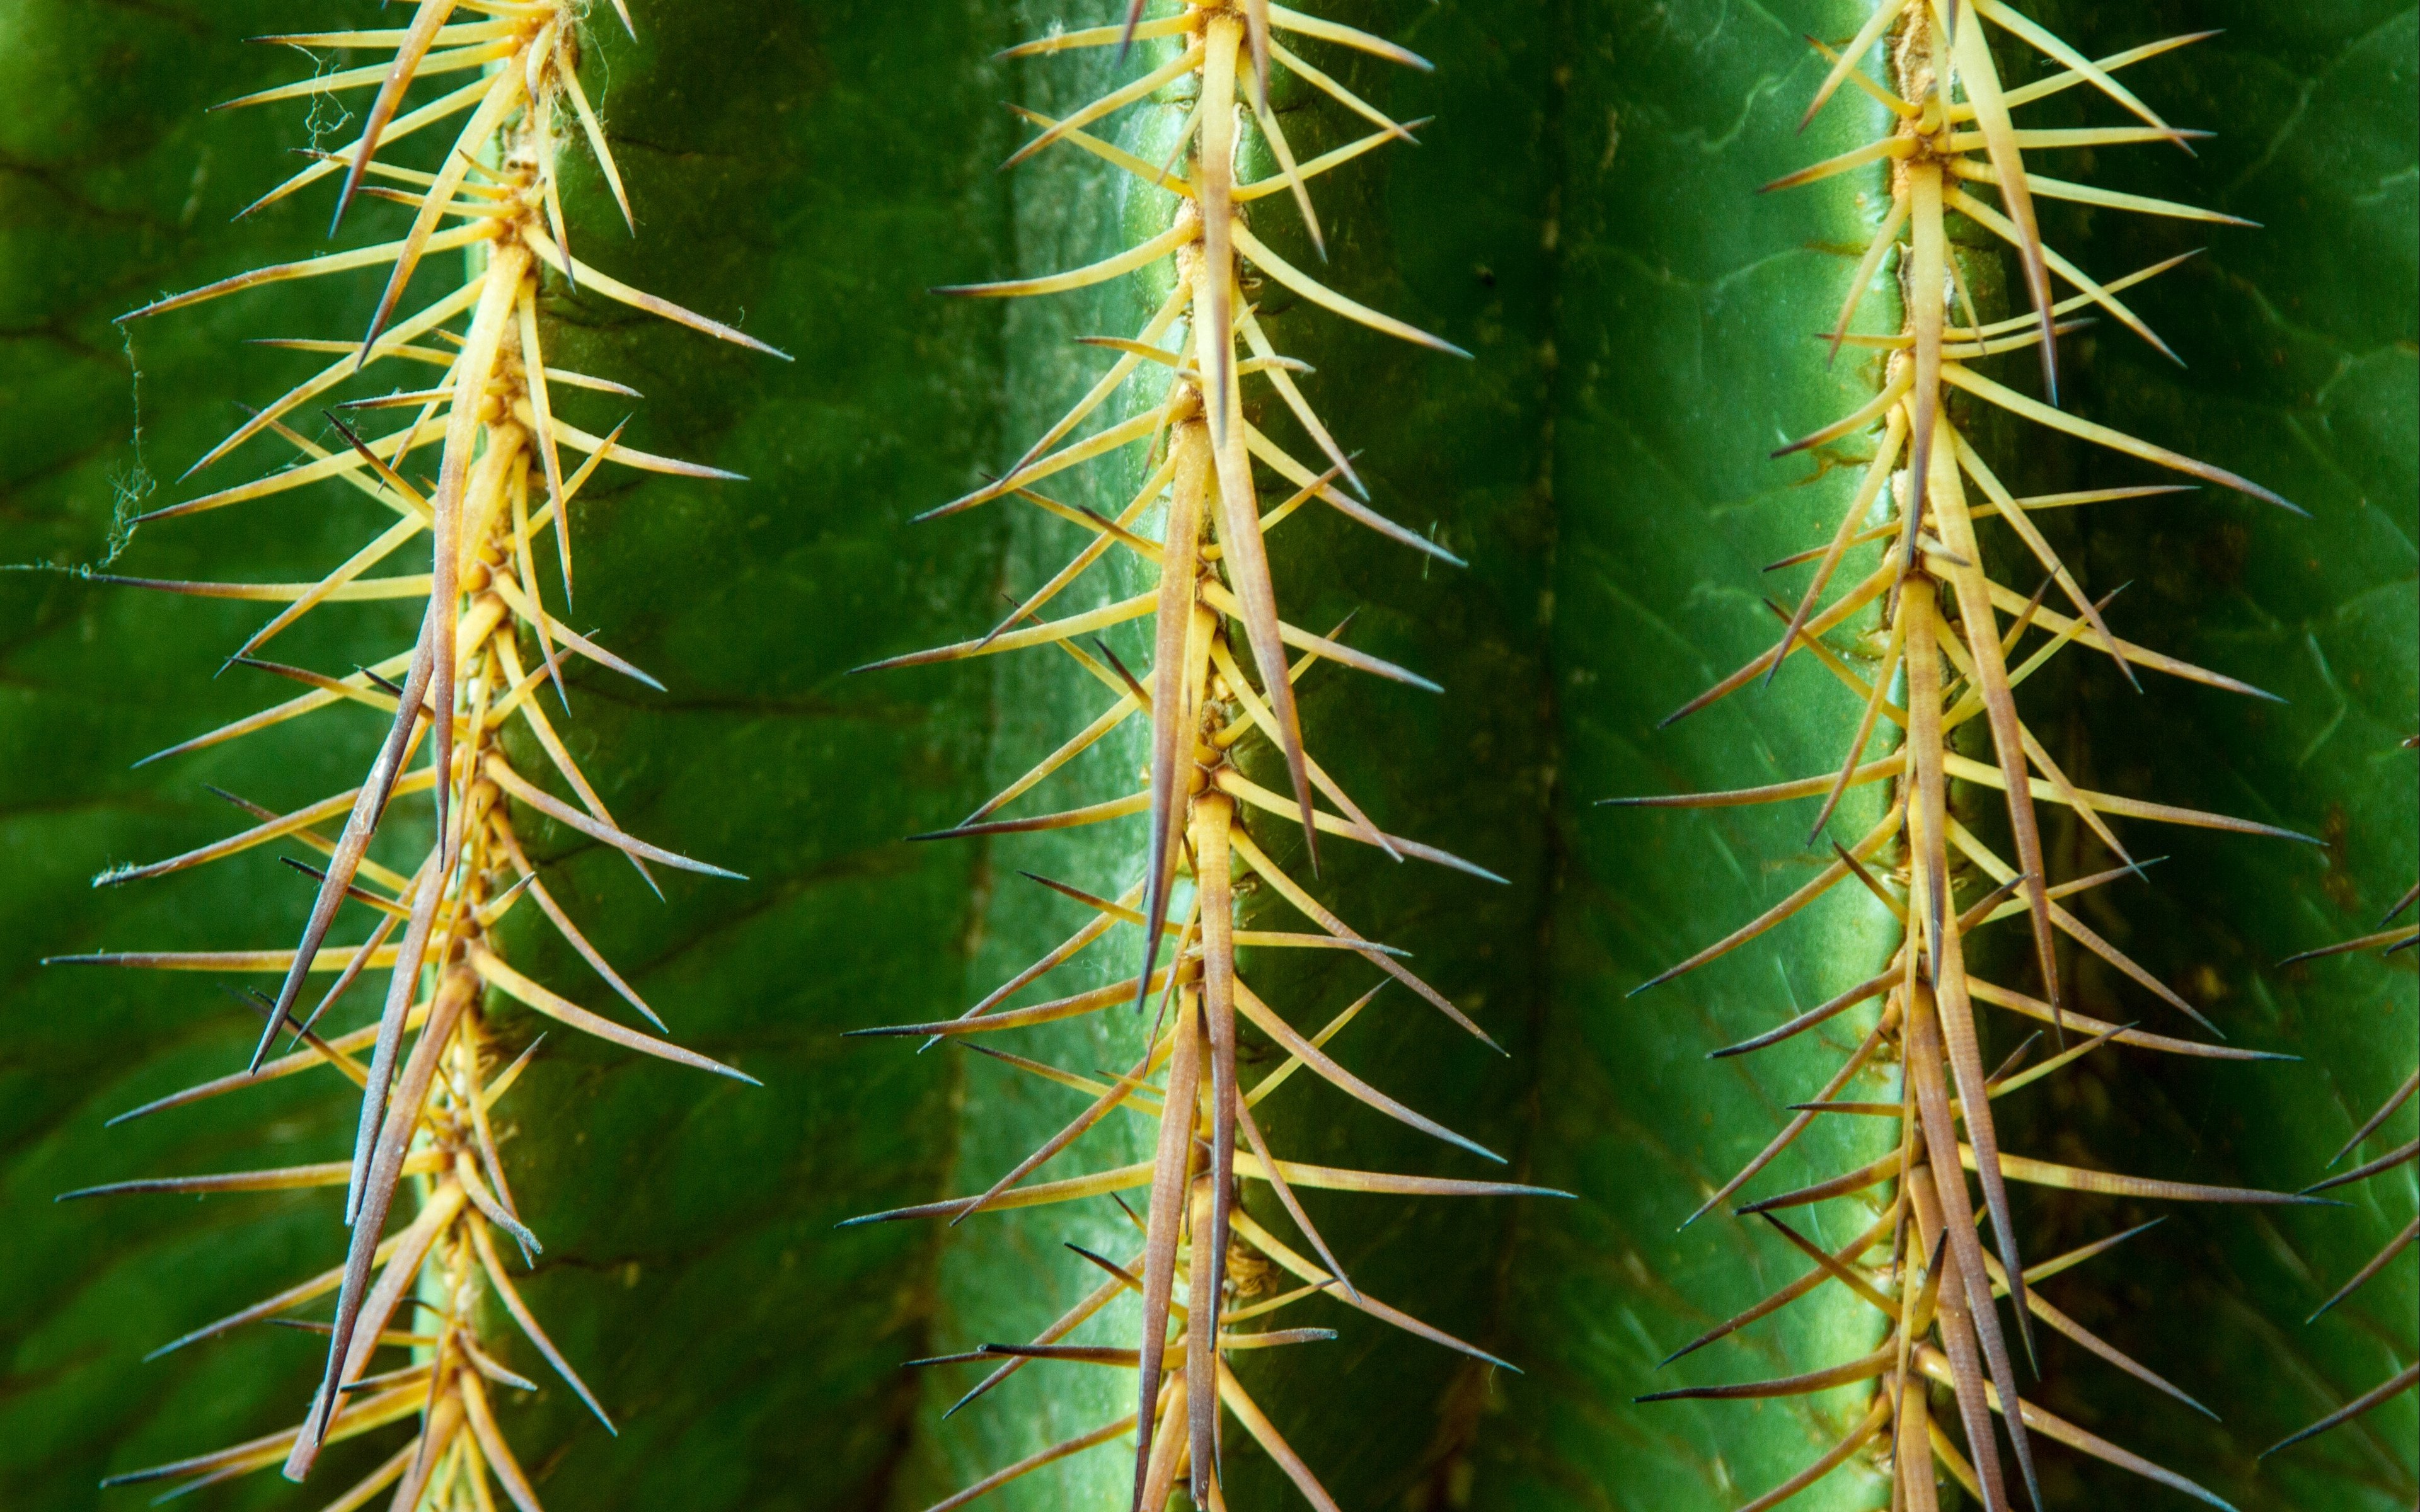 Cactus thorns Wallpaper 4k Ultra HD ID:3835